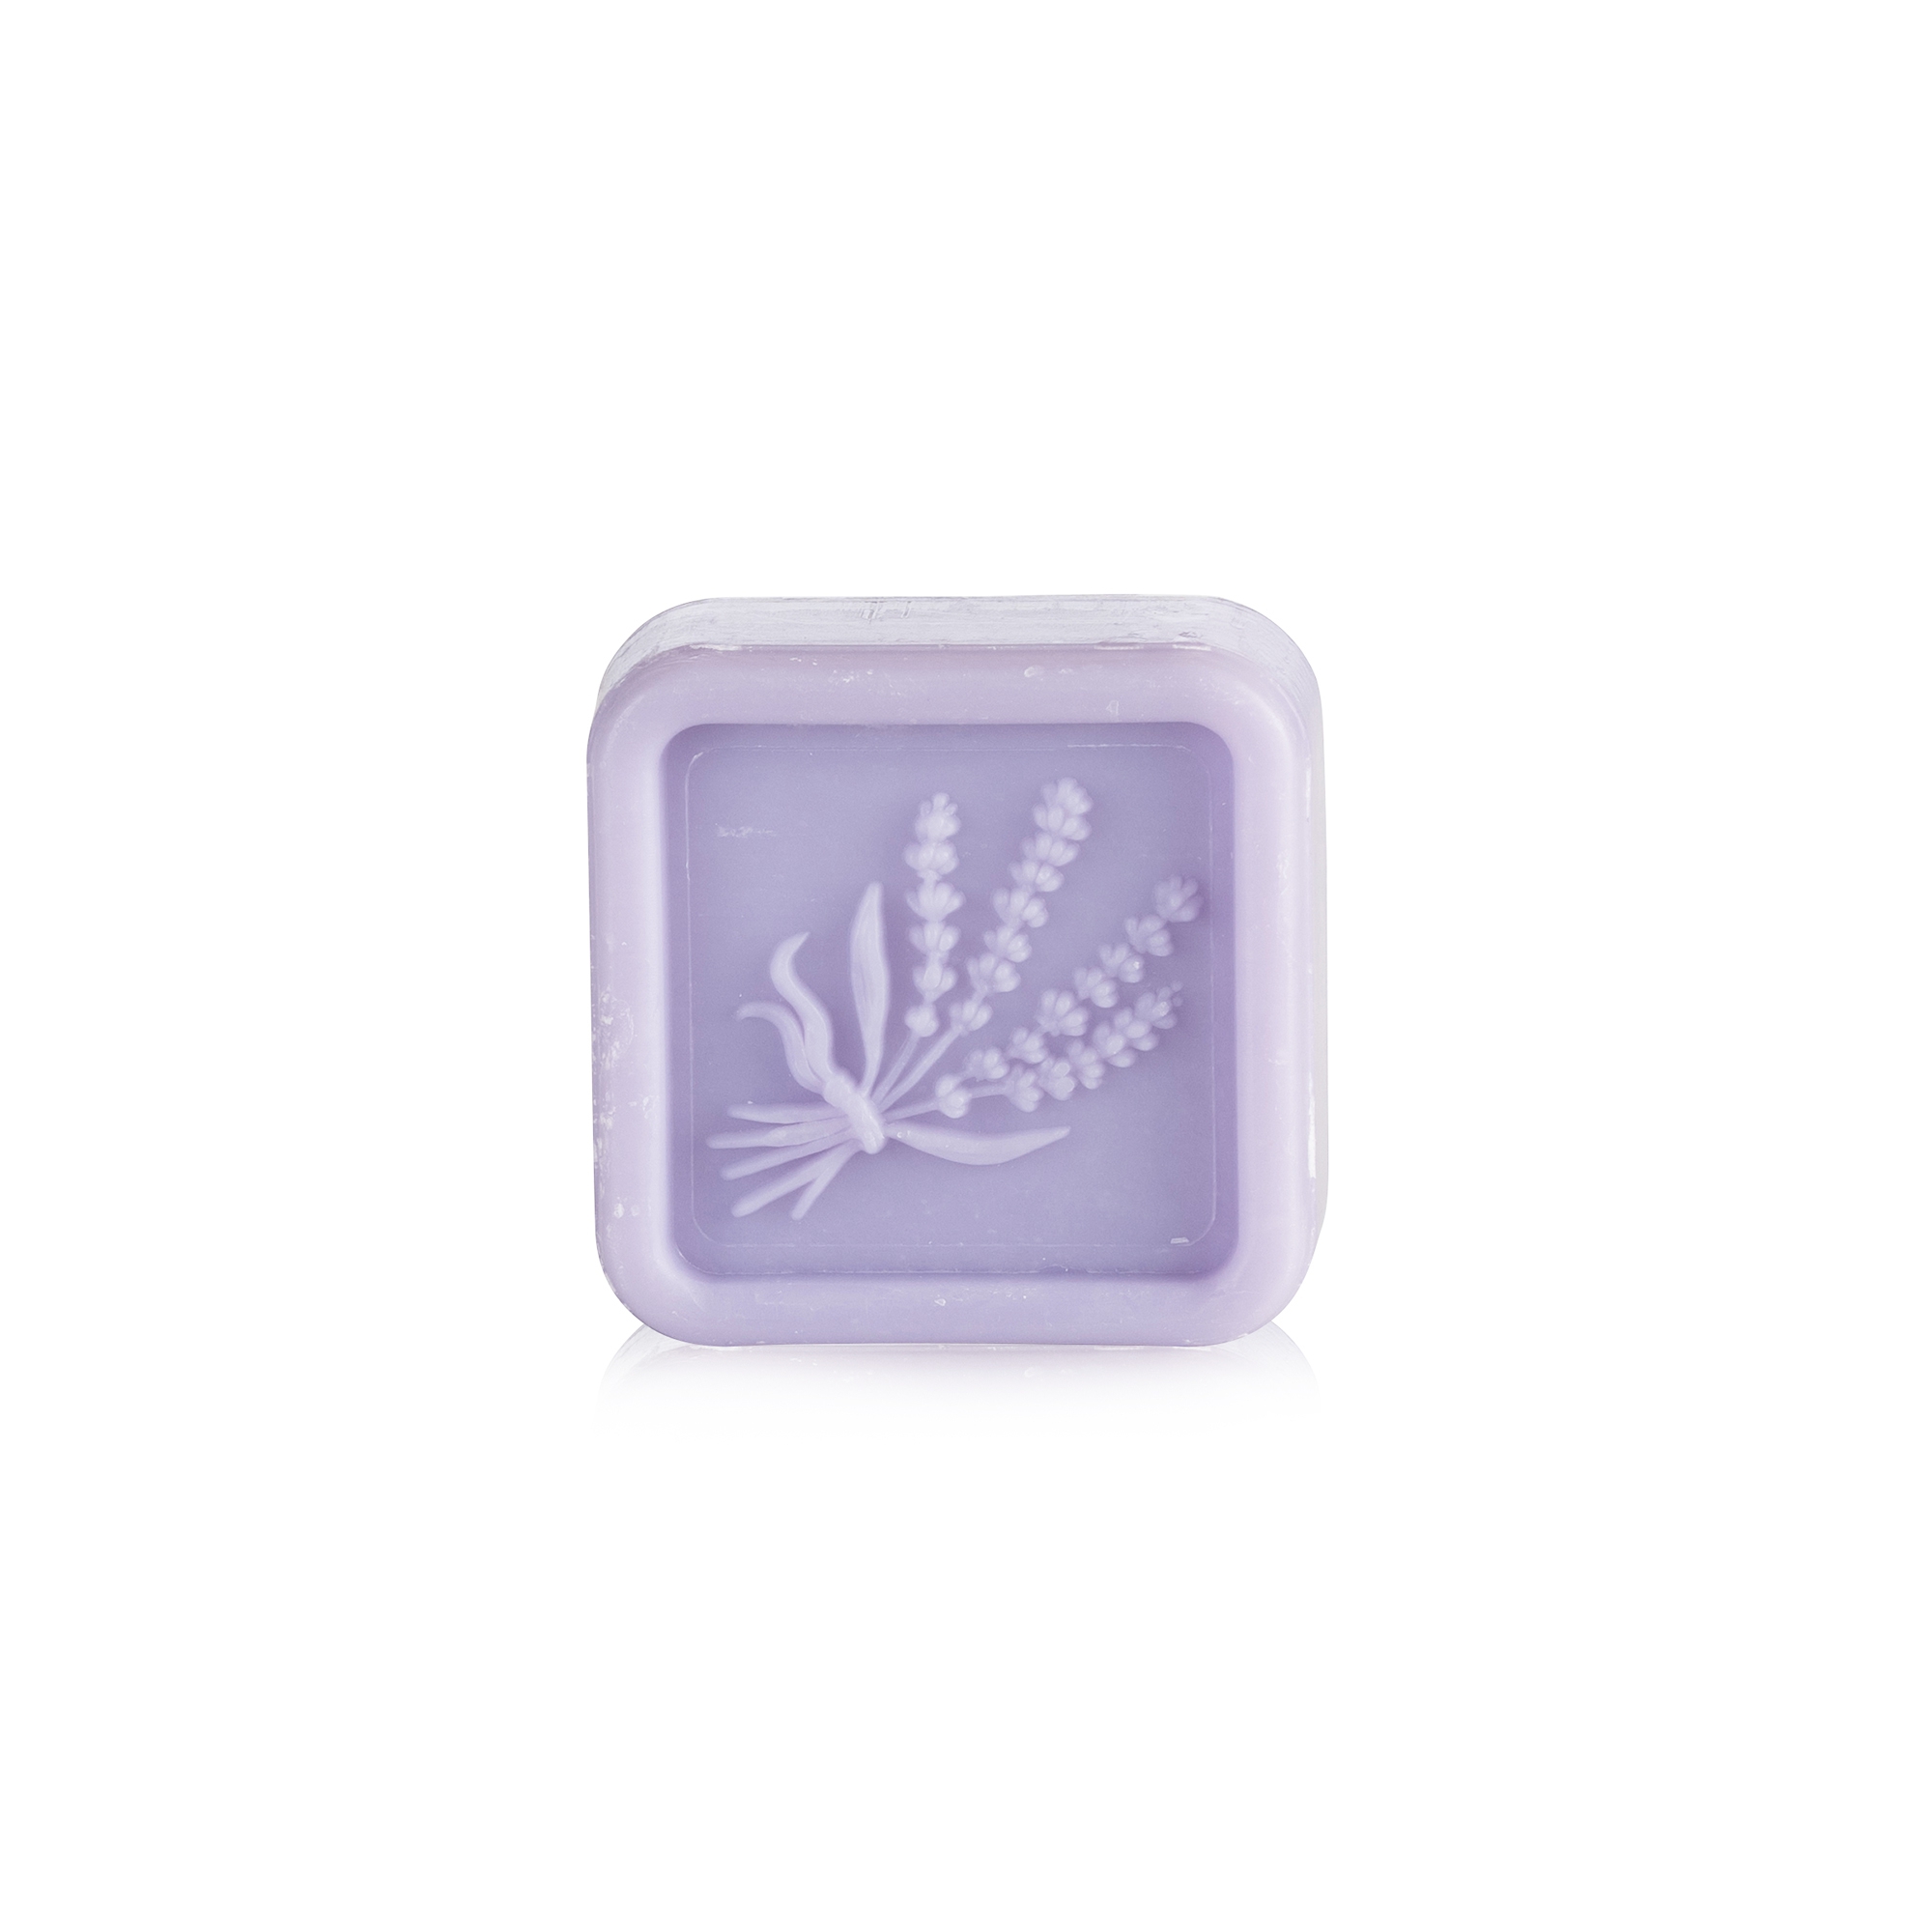 Gästeseife Lavendel aus der Provence 25g Esprit Provence